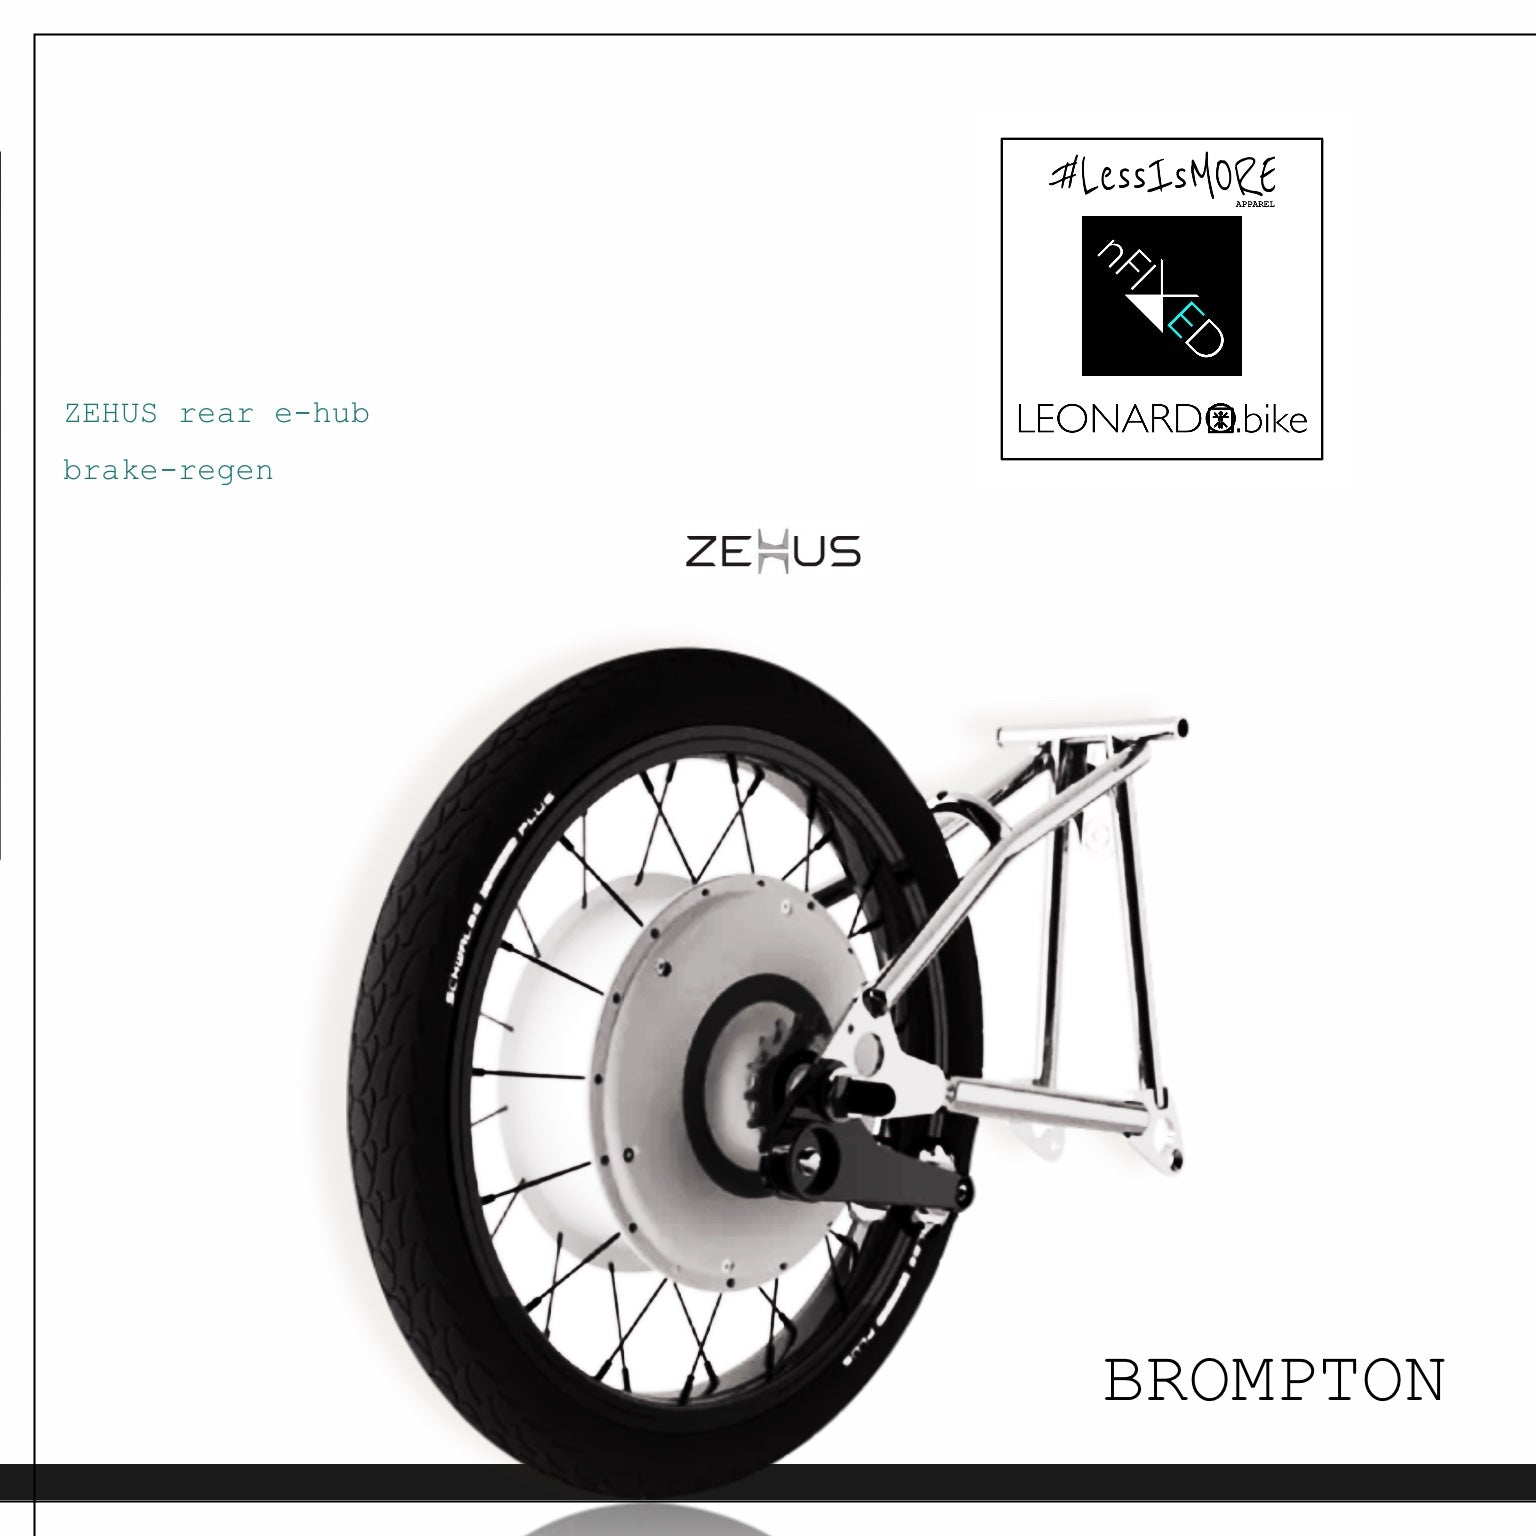 'ZEHUS A.I.O. BROMPTON SMART-WHEEL' electric conversion-kit